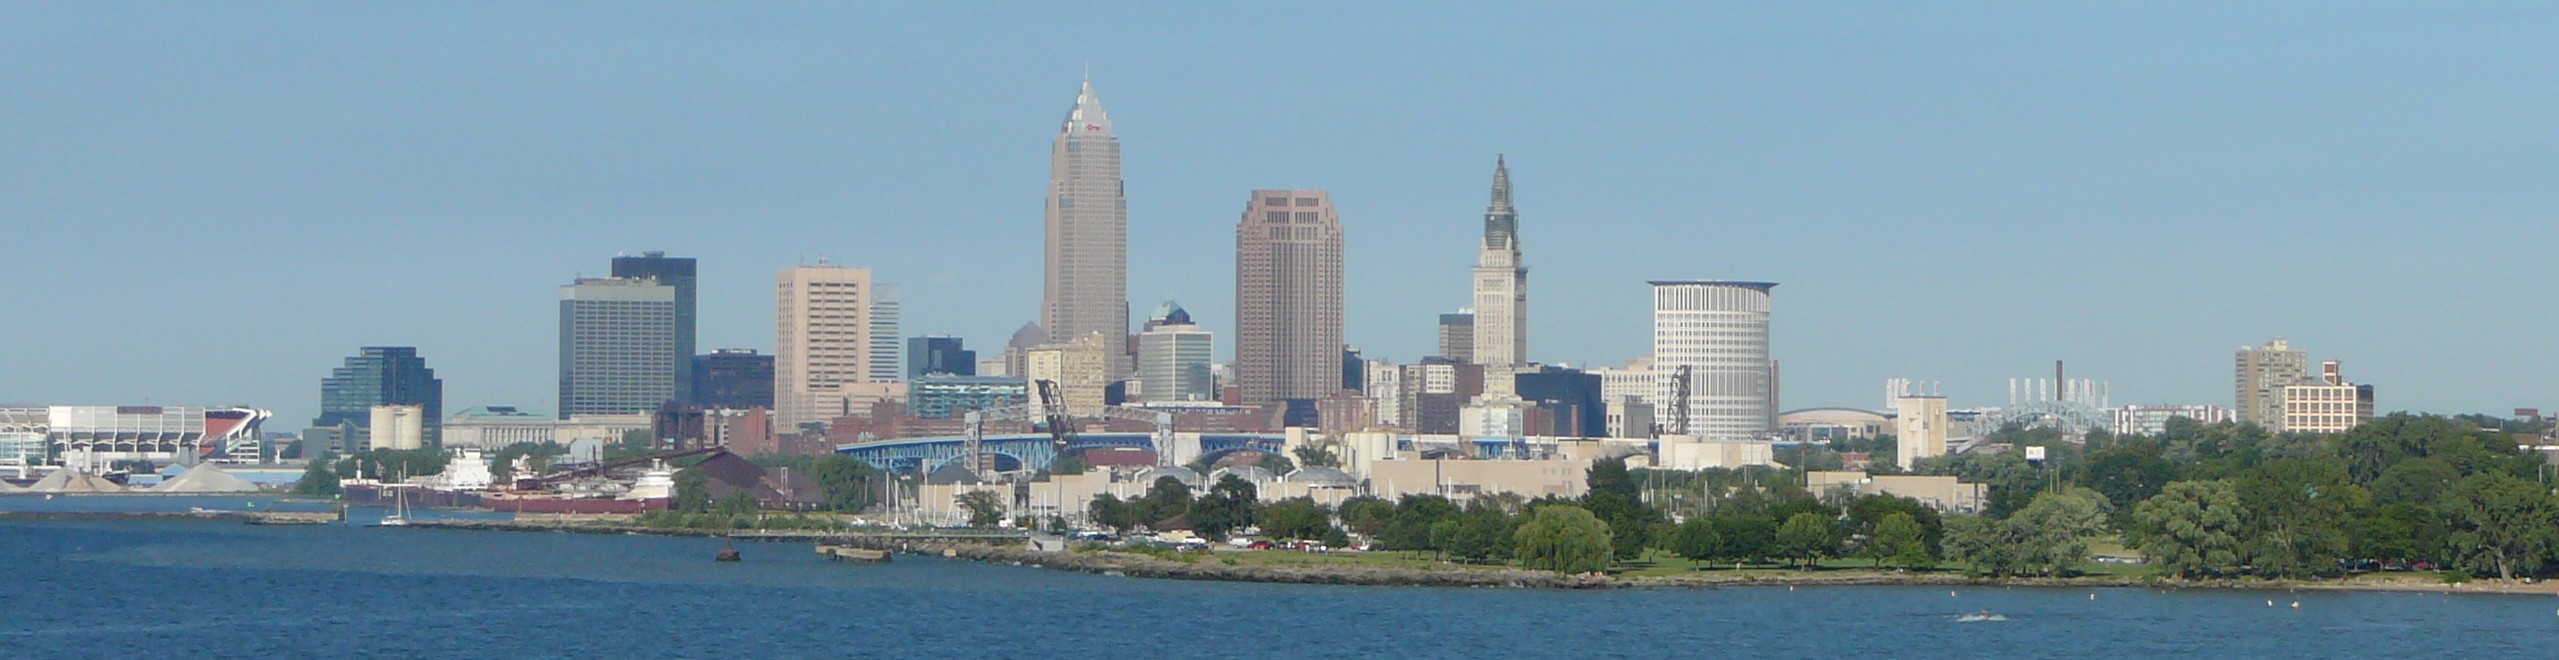 Cleveland_Skyline_Aug_2006